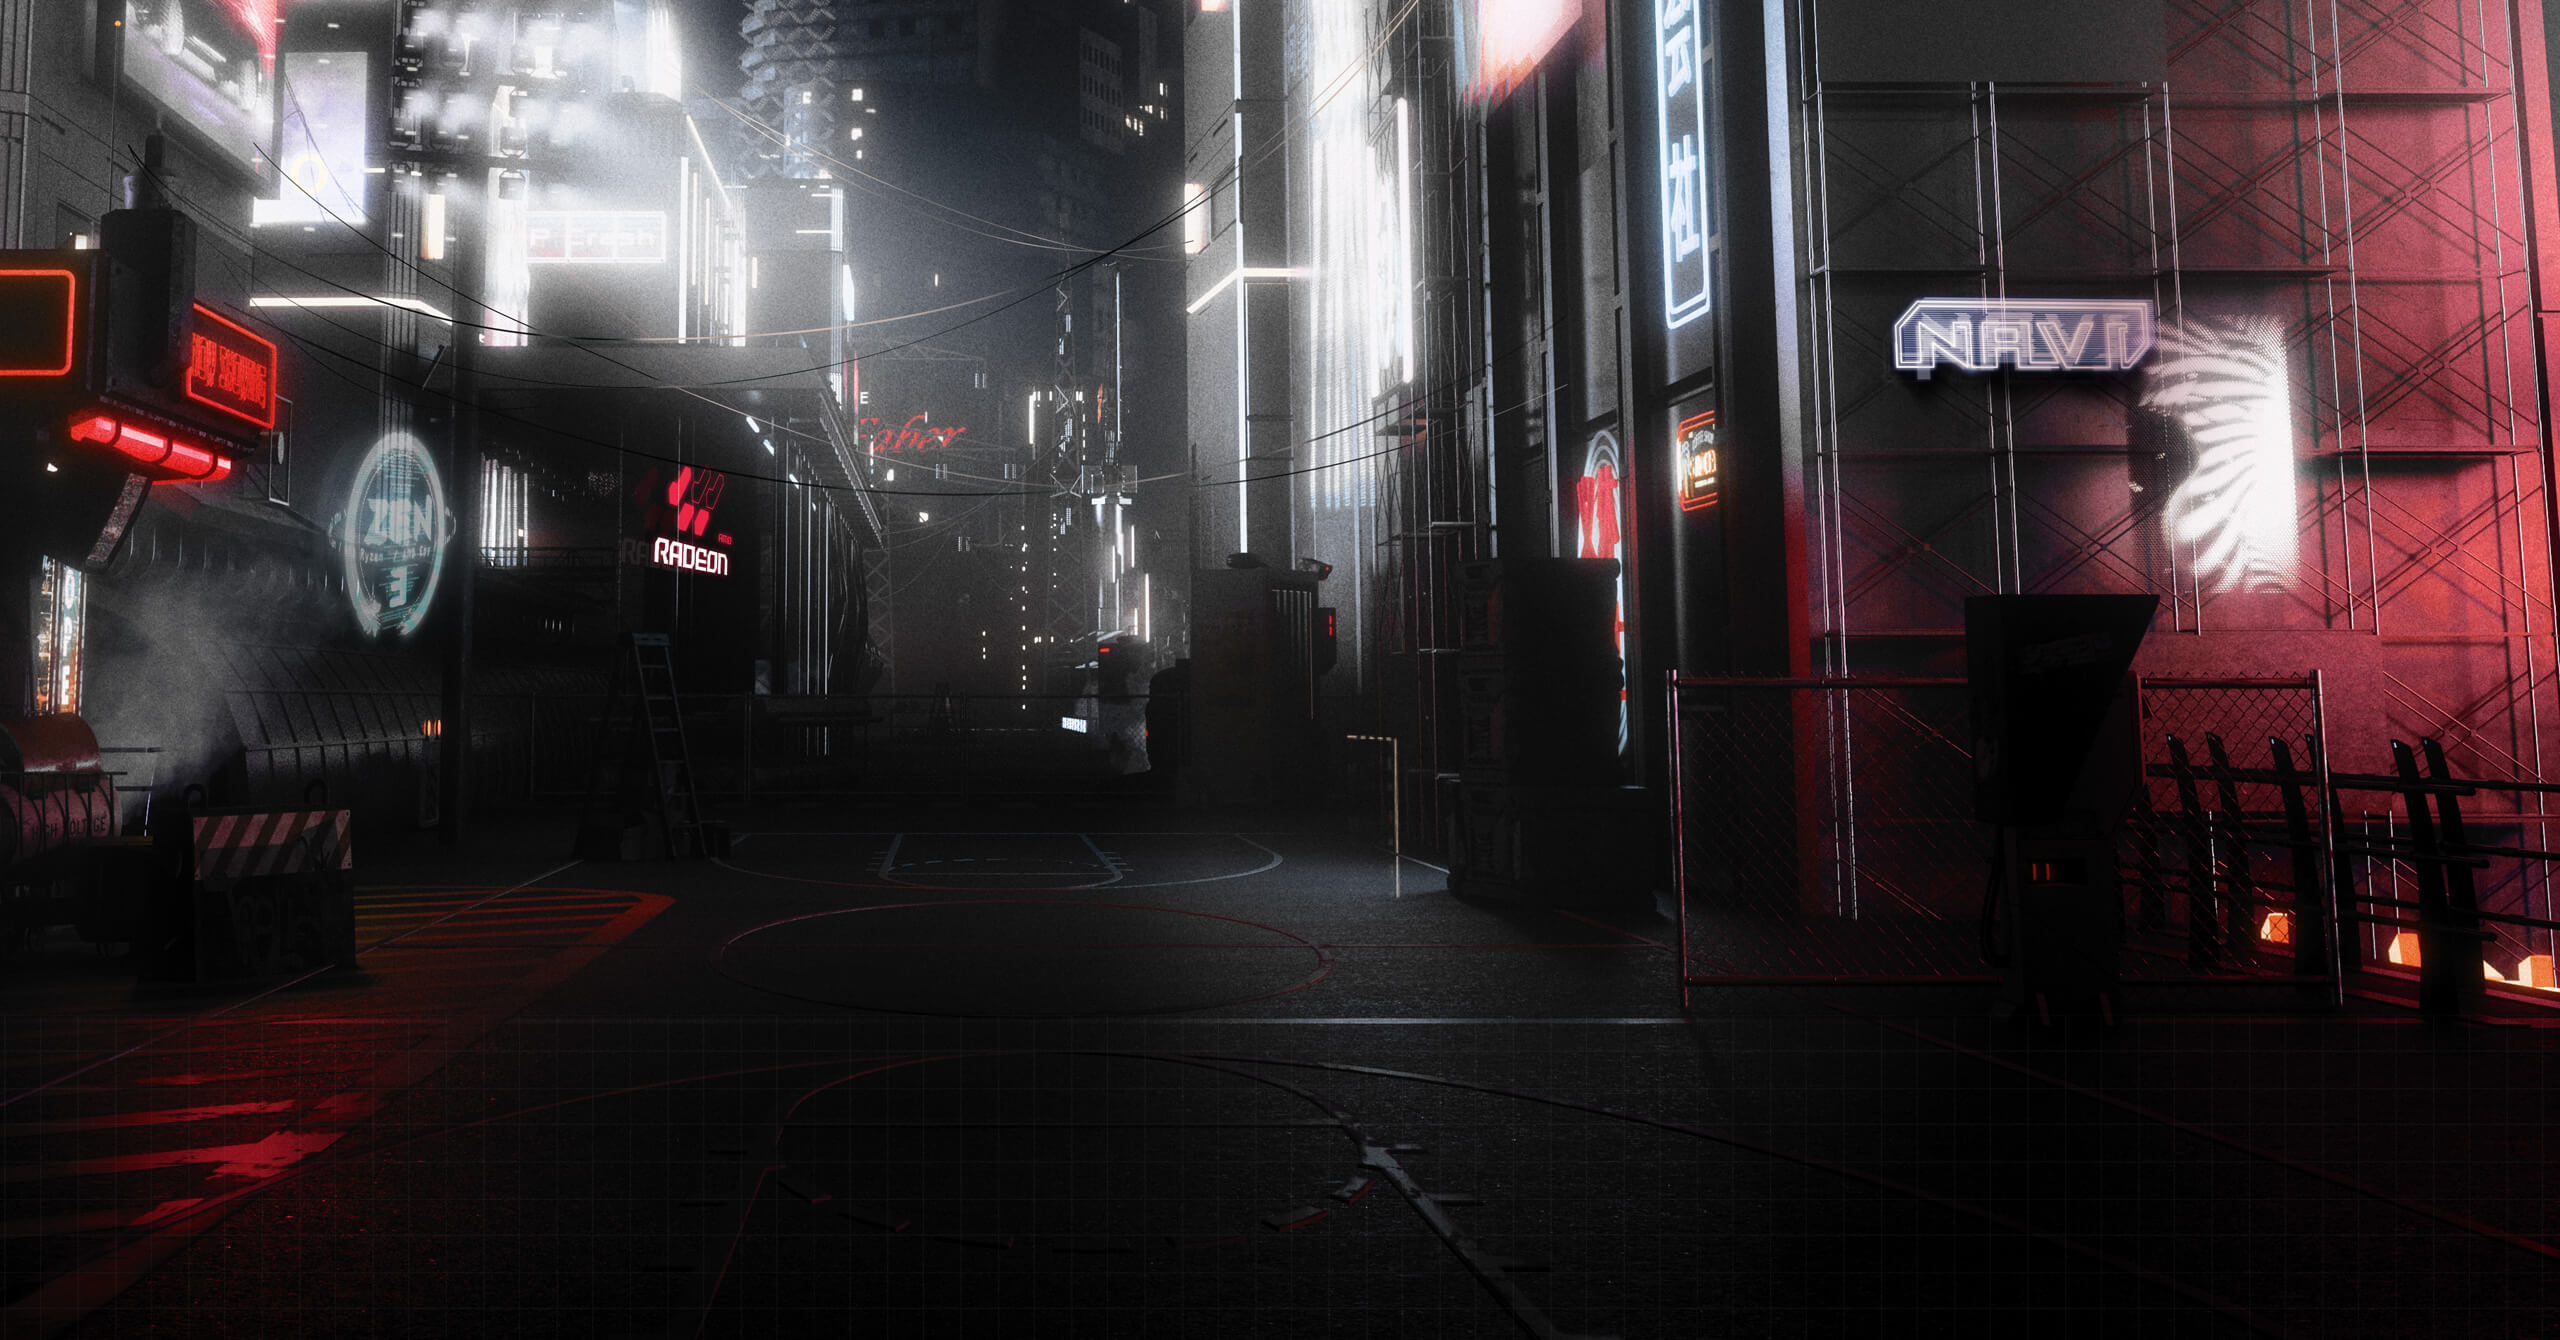 cyberpunk city with red lighting